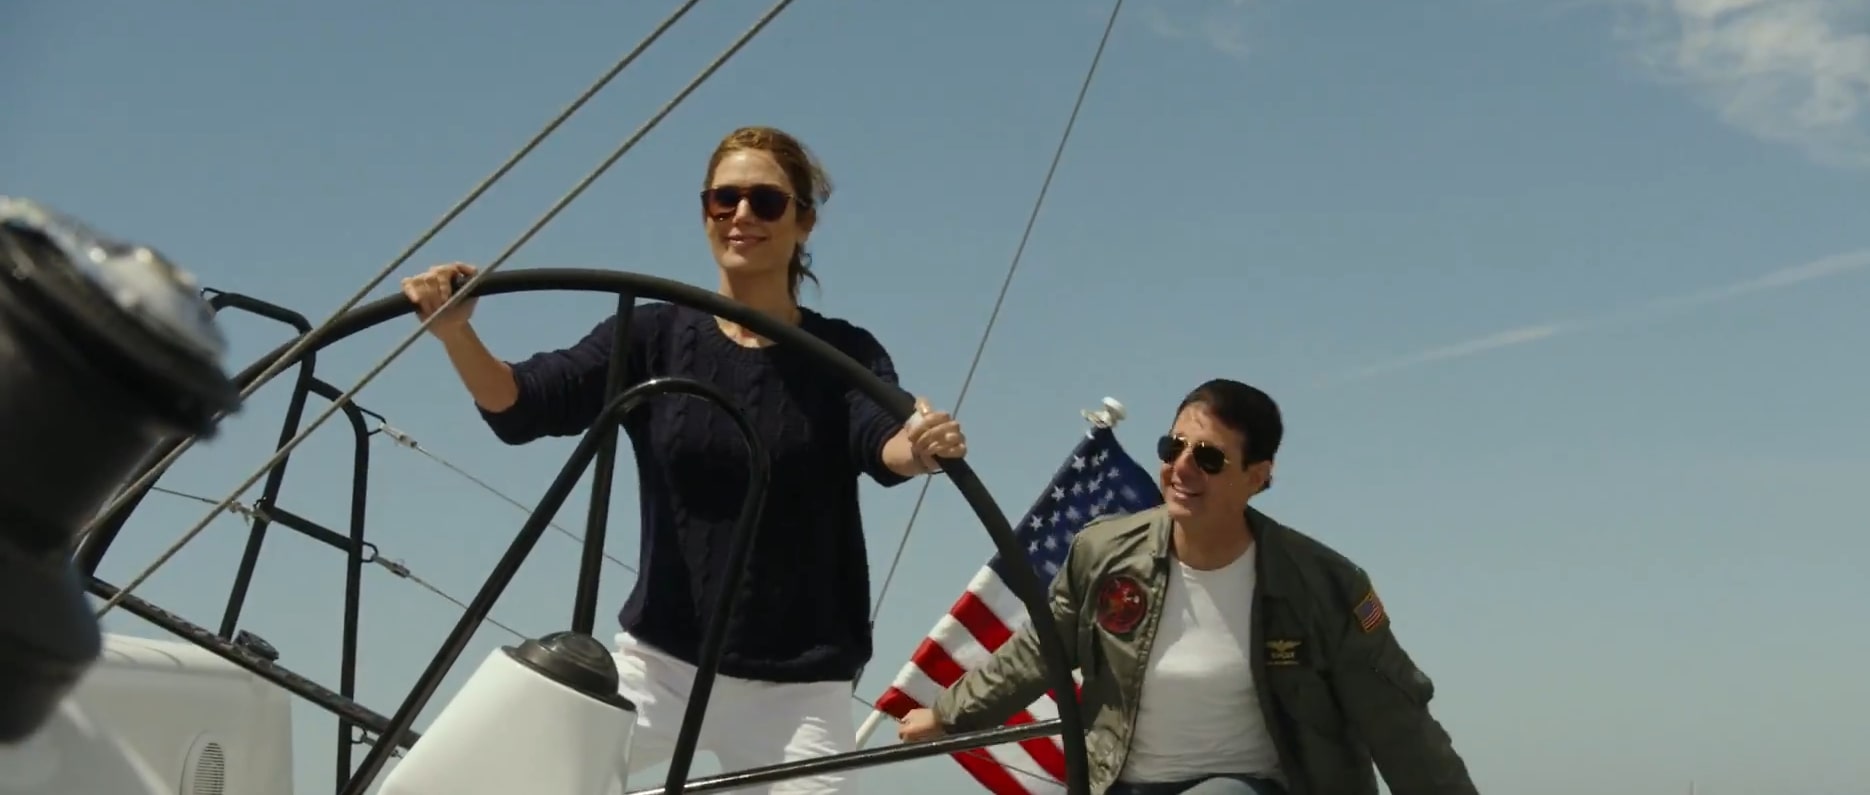 Jennifer Connelly’s Top Gun Sunglasses – Like a Film Star